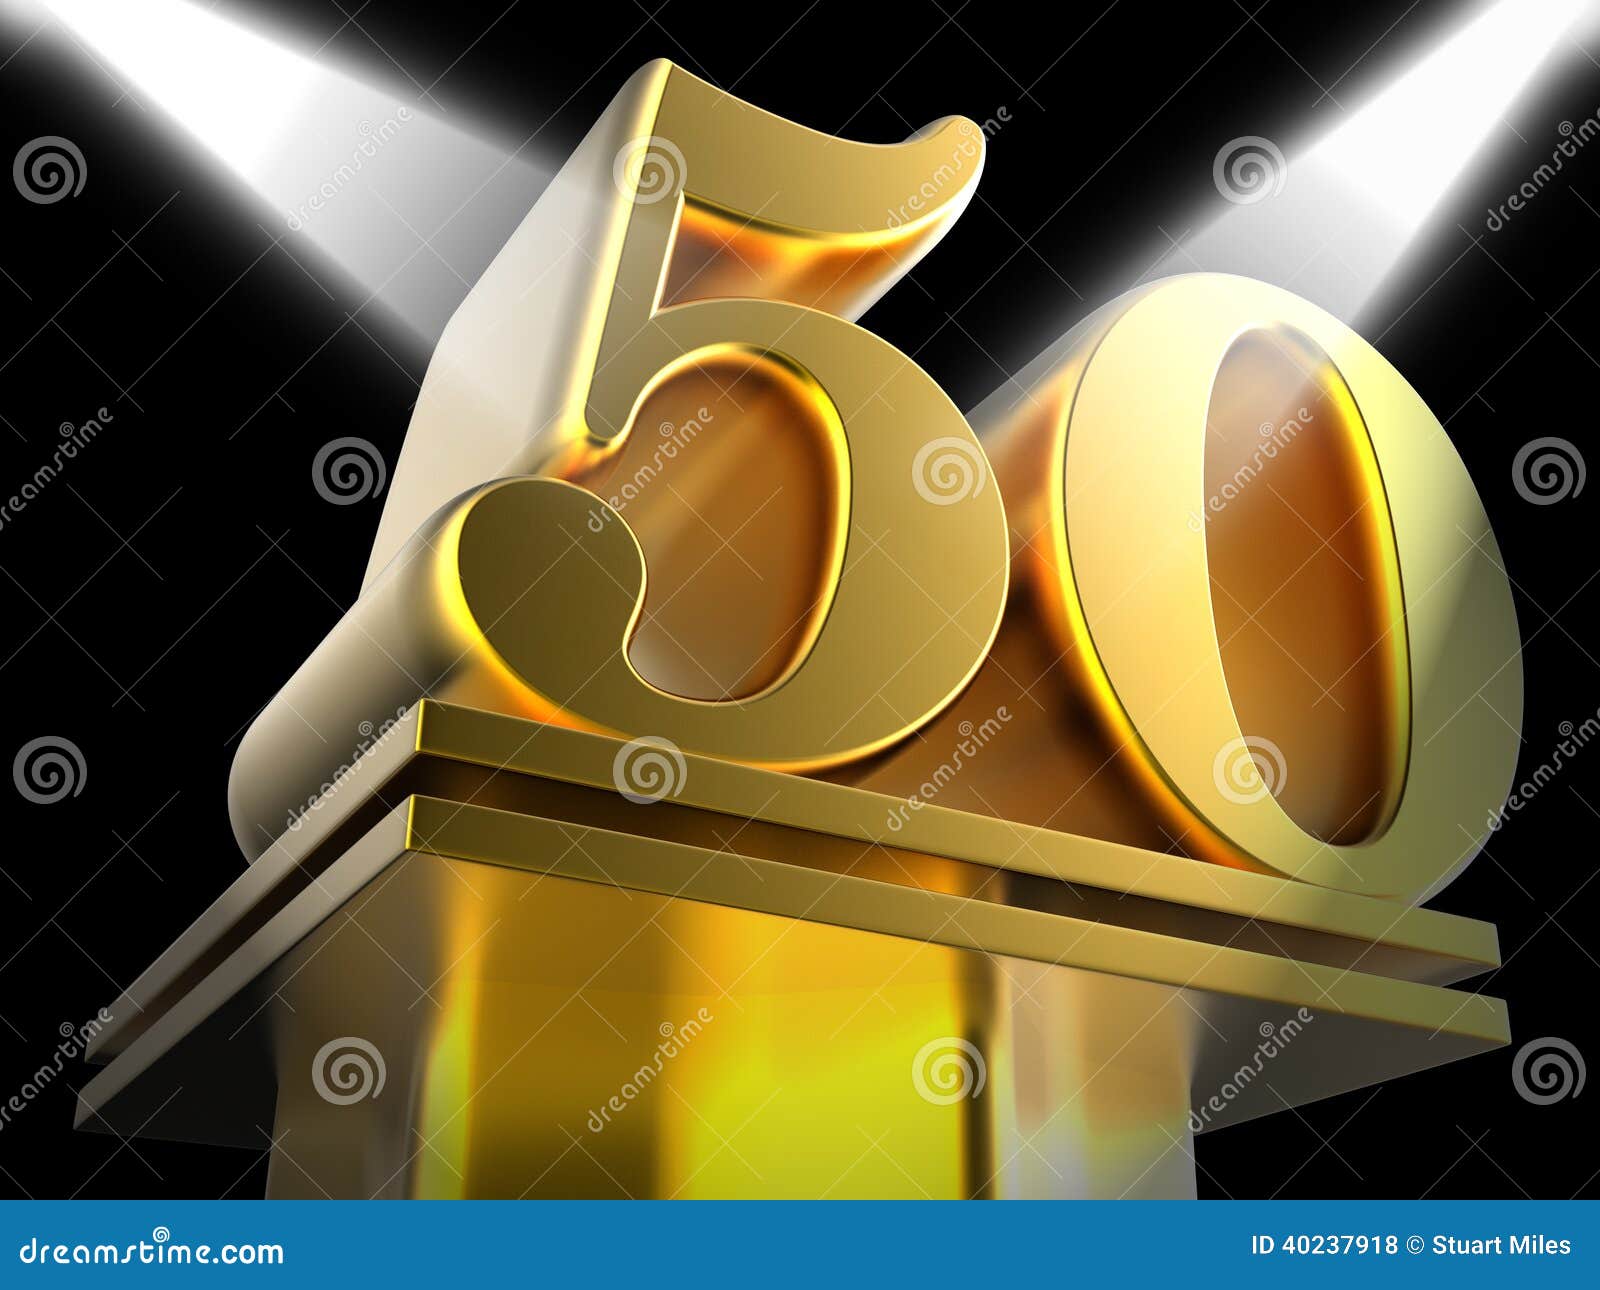 Golden Fifty on Pedestal Means Movie Awards or Stock Illustration ...